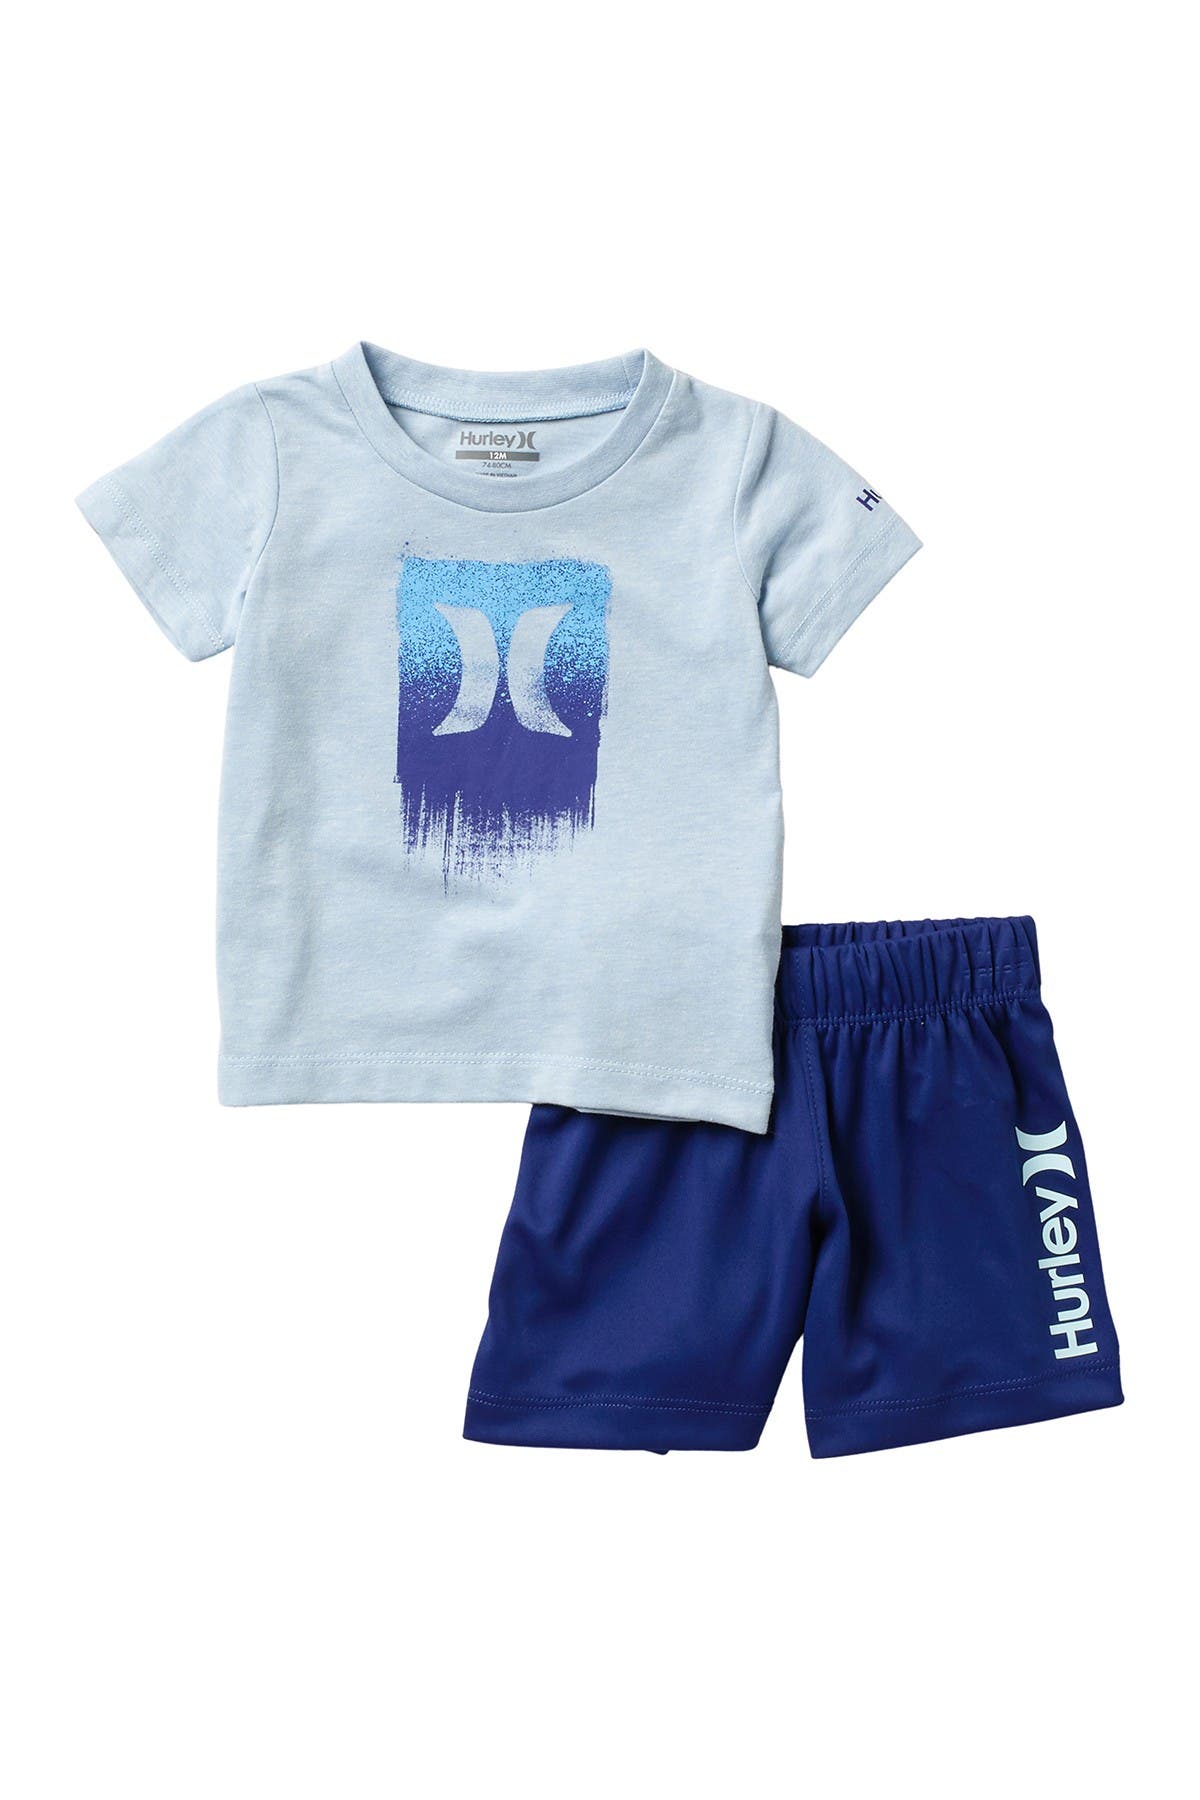 Hurley Dri-fit Logo T-shirt & Shorts Set In U1a-i Blue